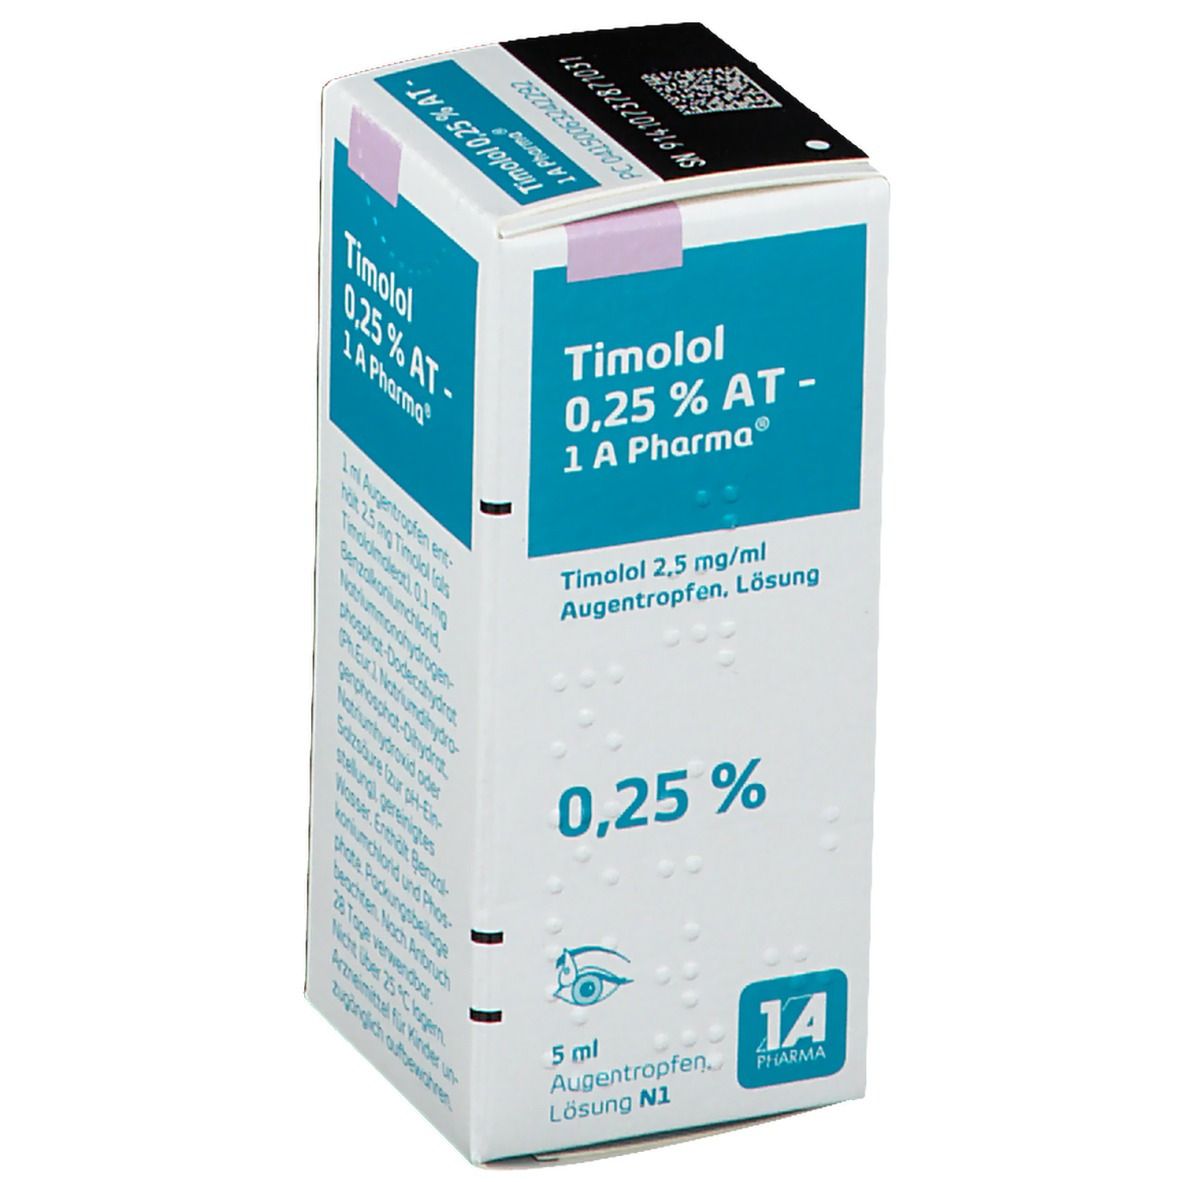 Timolol 0.25% At 1A Pharma®